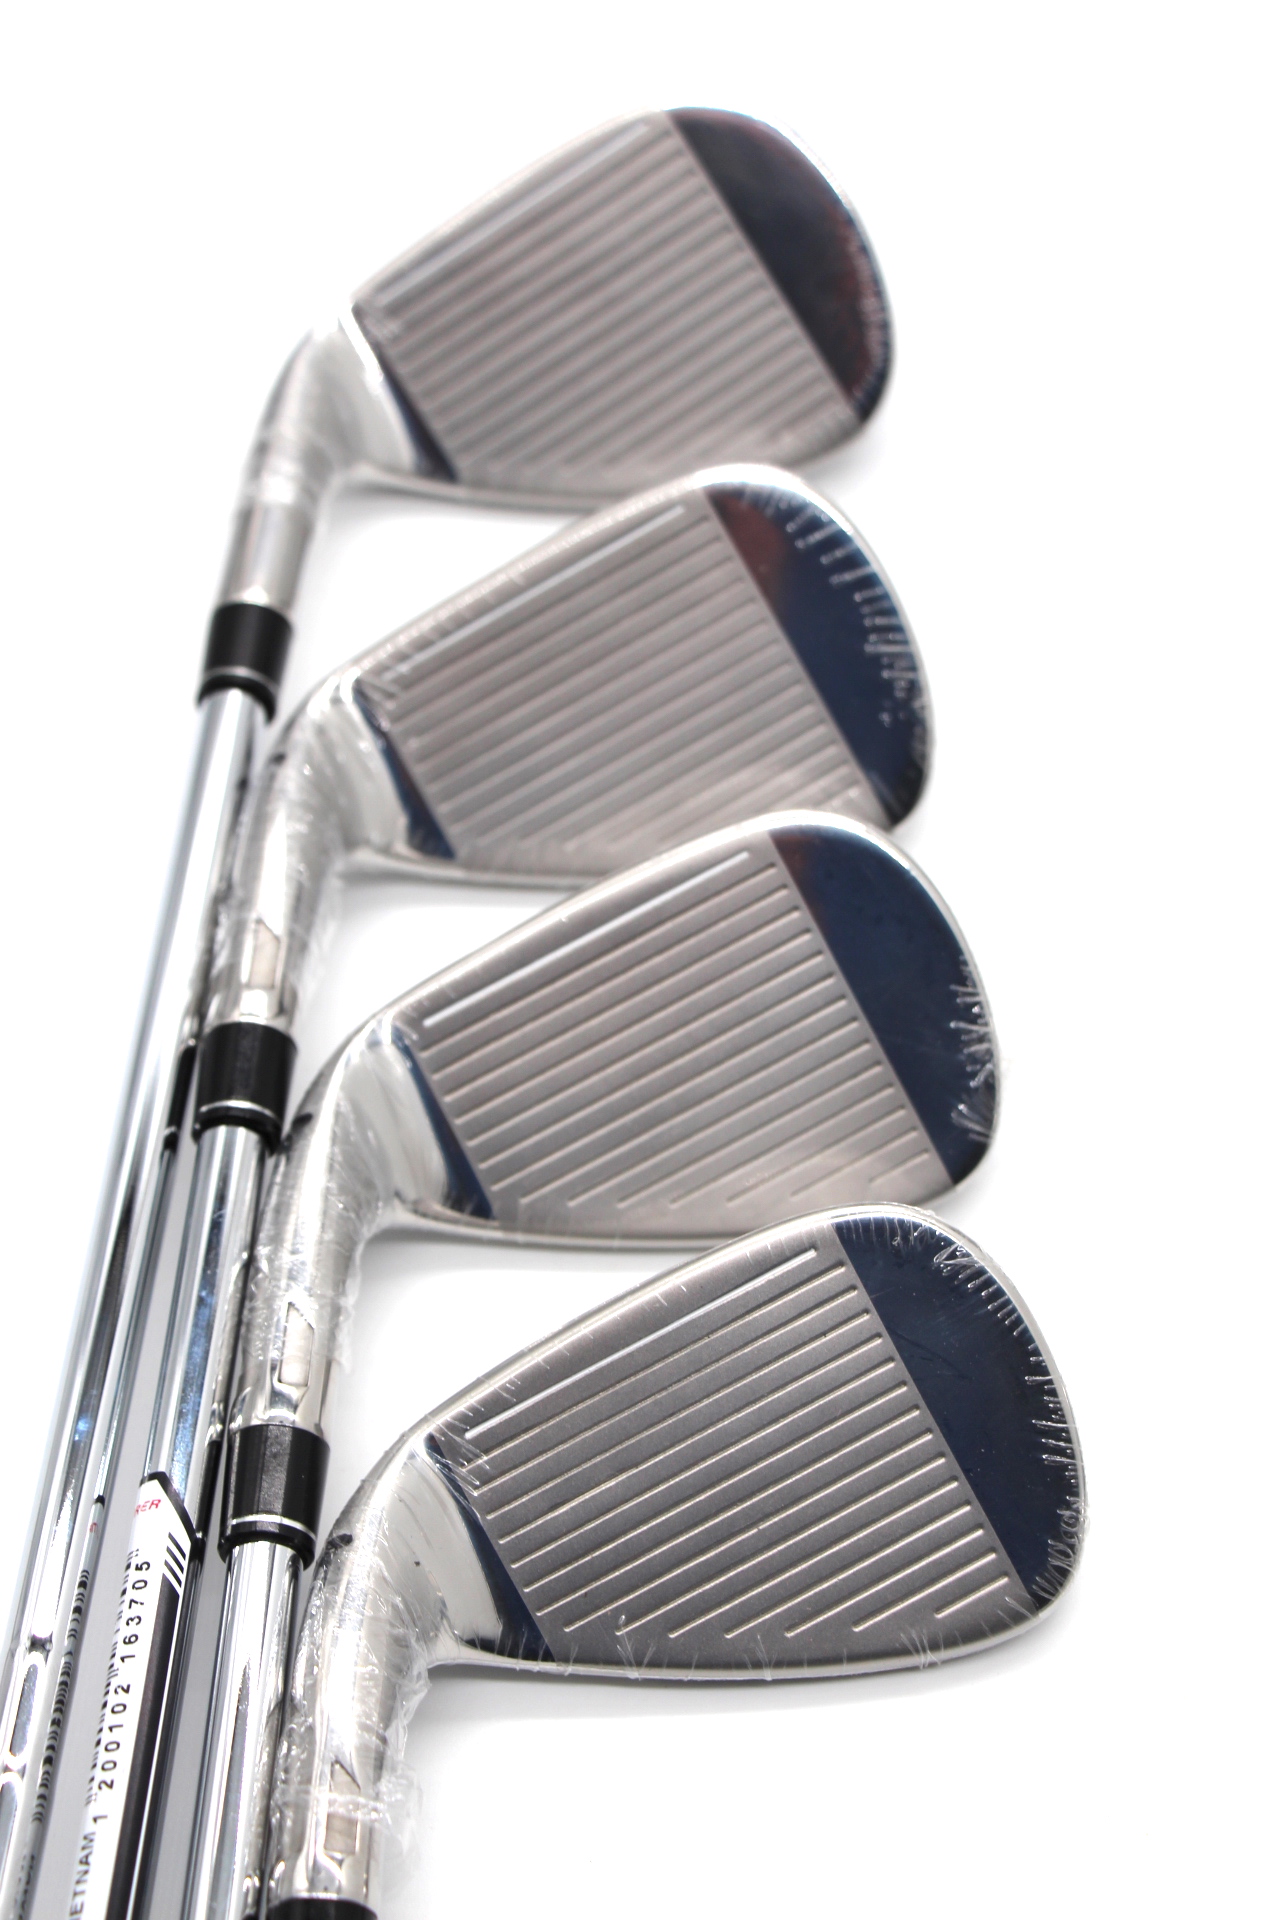 New TaylorMade Sim Max 5-SW Iron Set - Golf Geeks